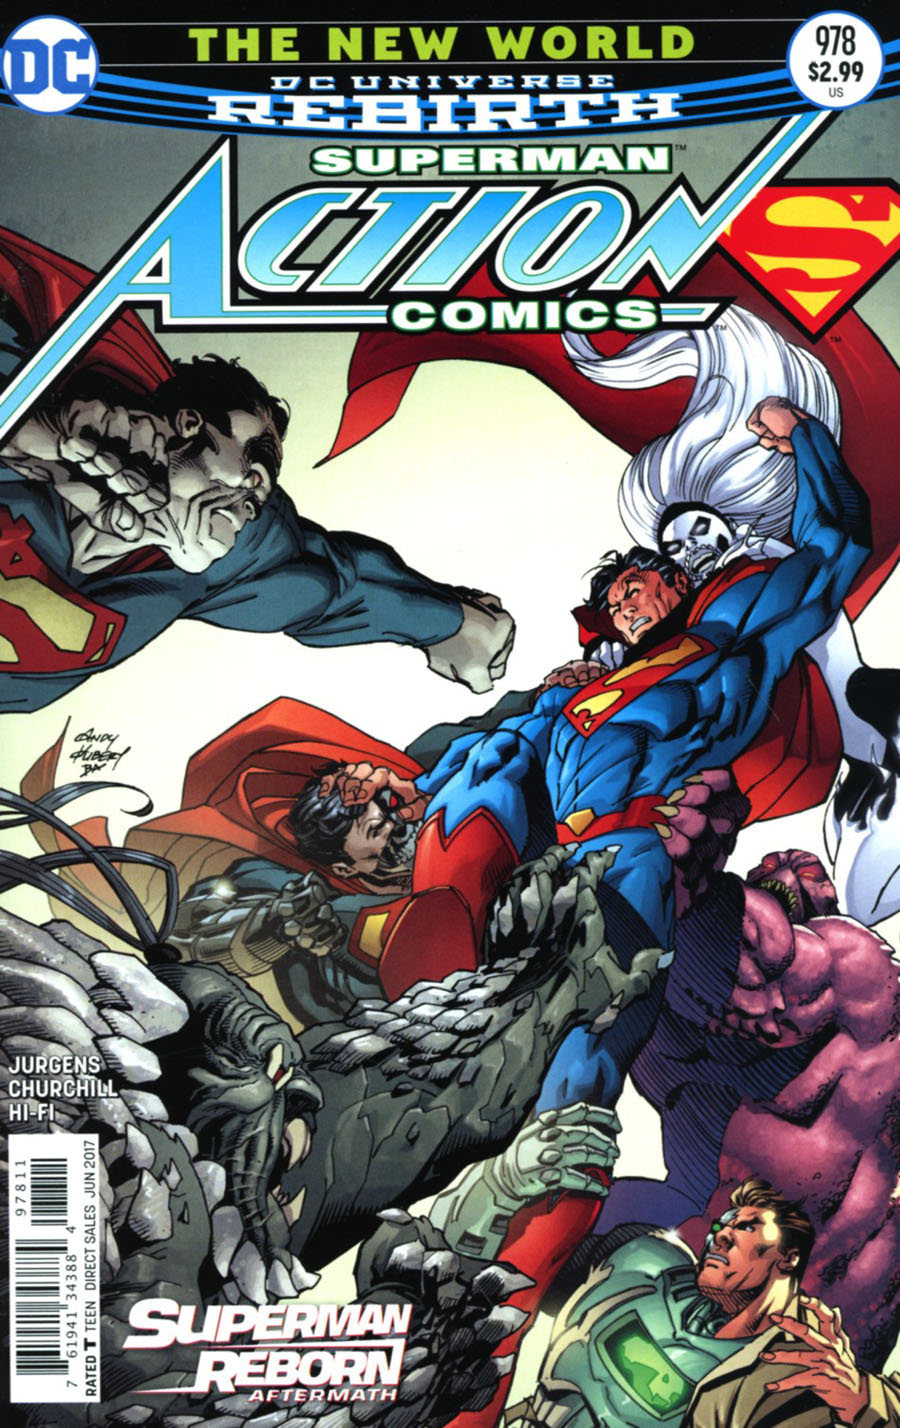 Action Comics #978